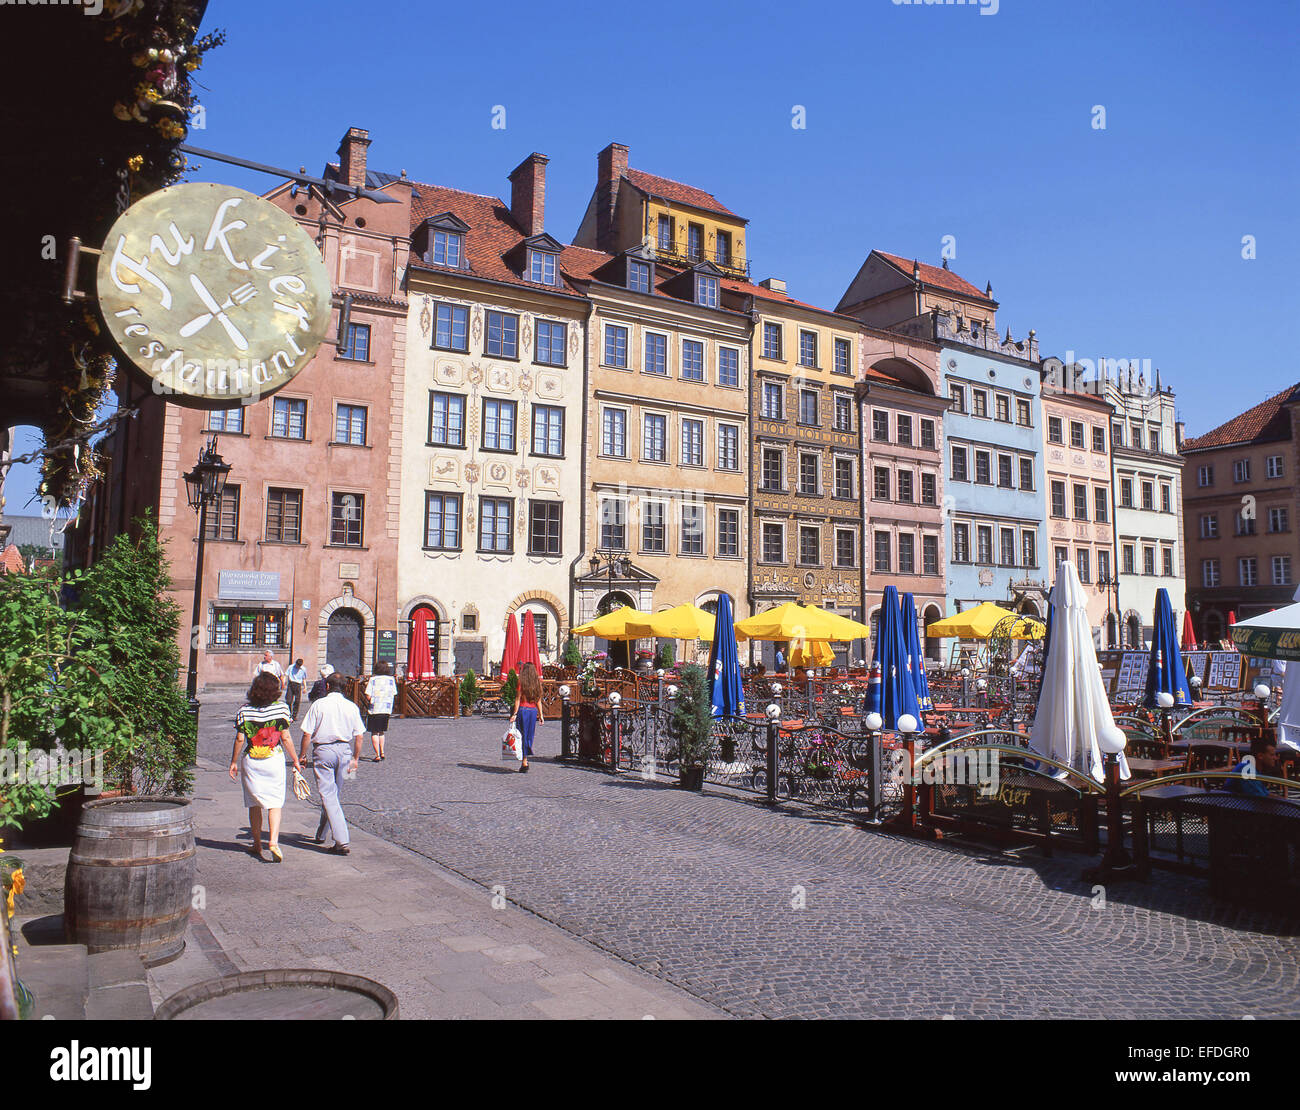 Old Town Market Place, Old Town, Warsaw (Warszawa), Masovia Province, Republic of Poland Stock Photo